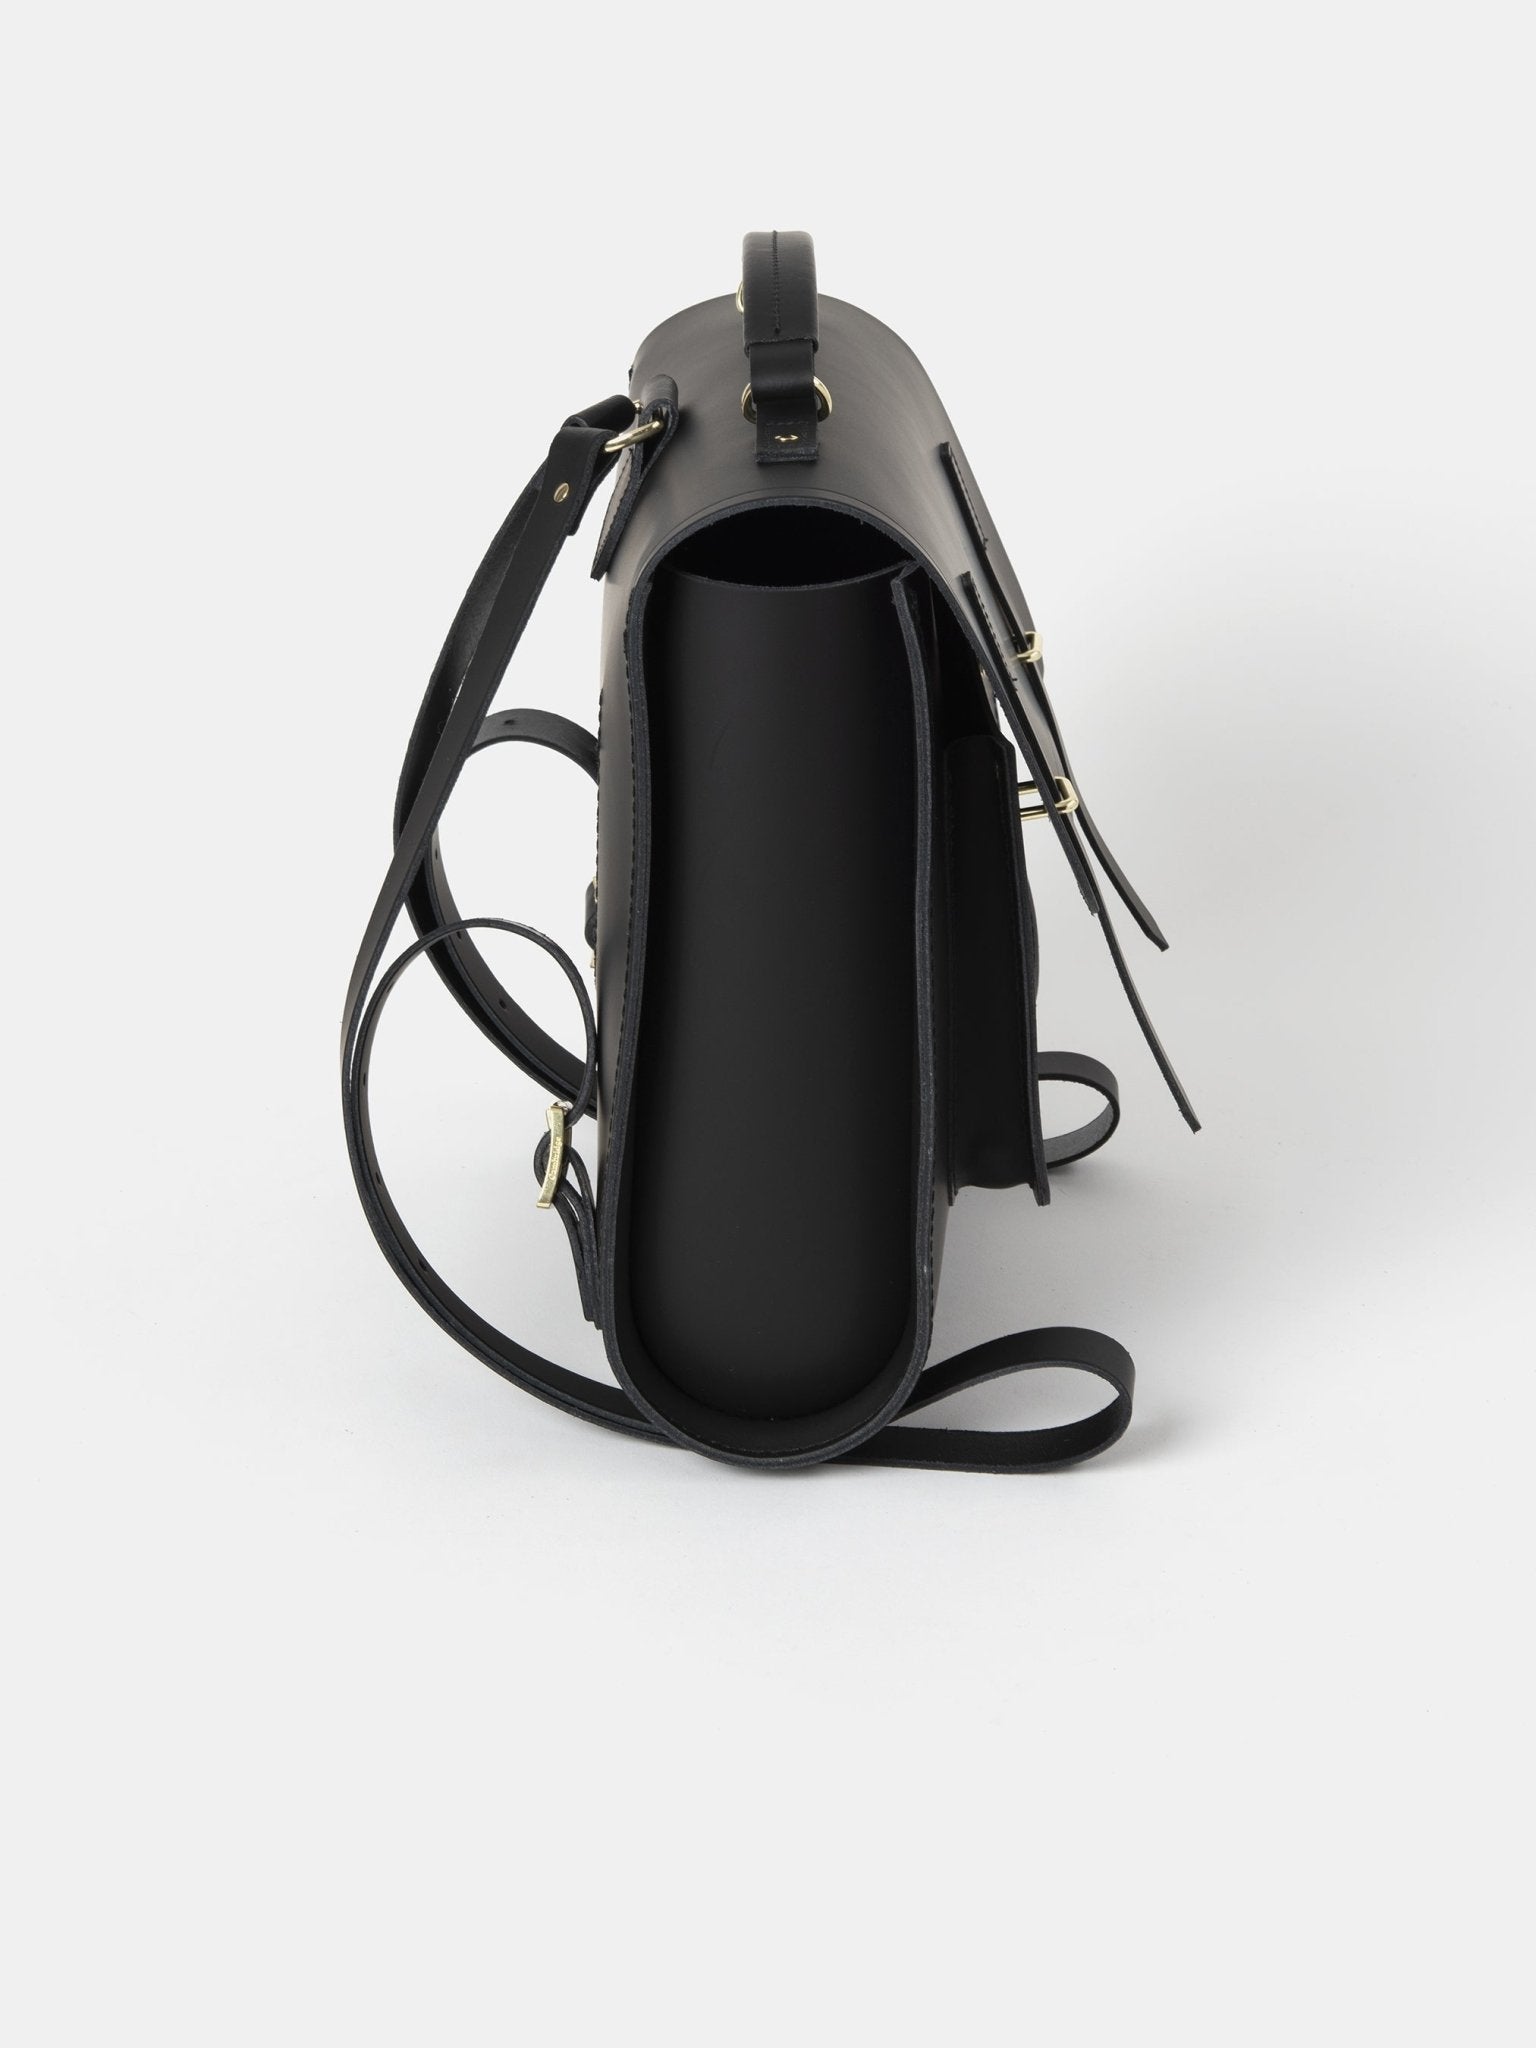 The Messenger Backpack - Black Matte - The Cambridge Satchel Company US Store